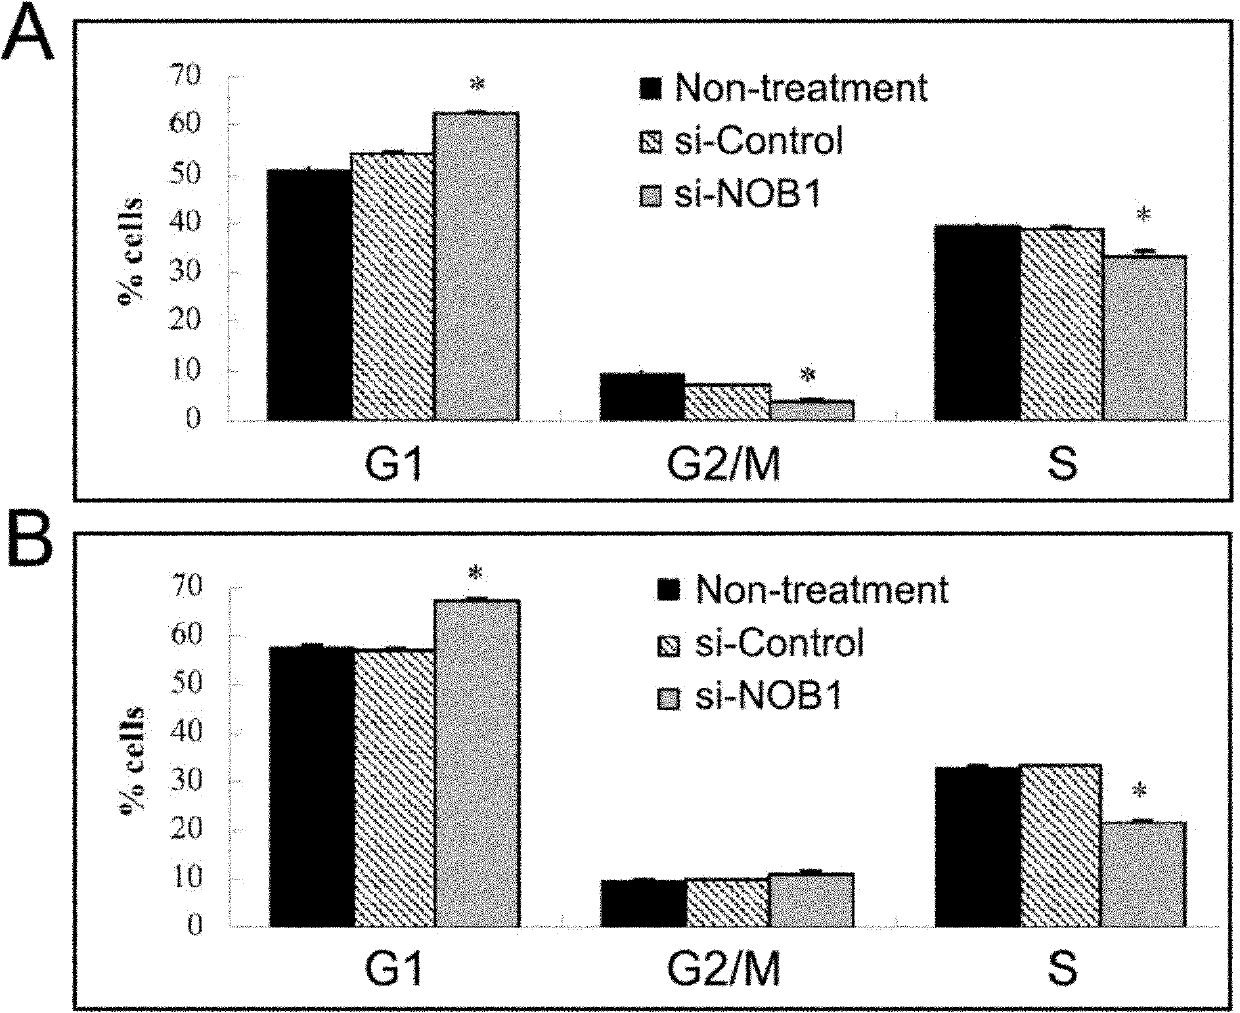 Application of NOB1 gene in treating brain glioma disease